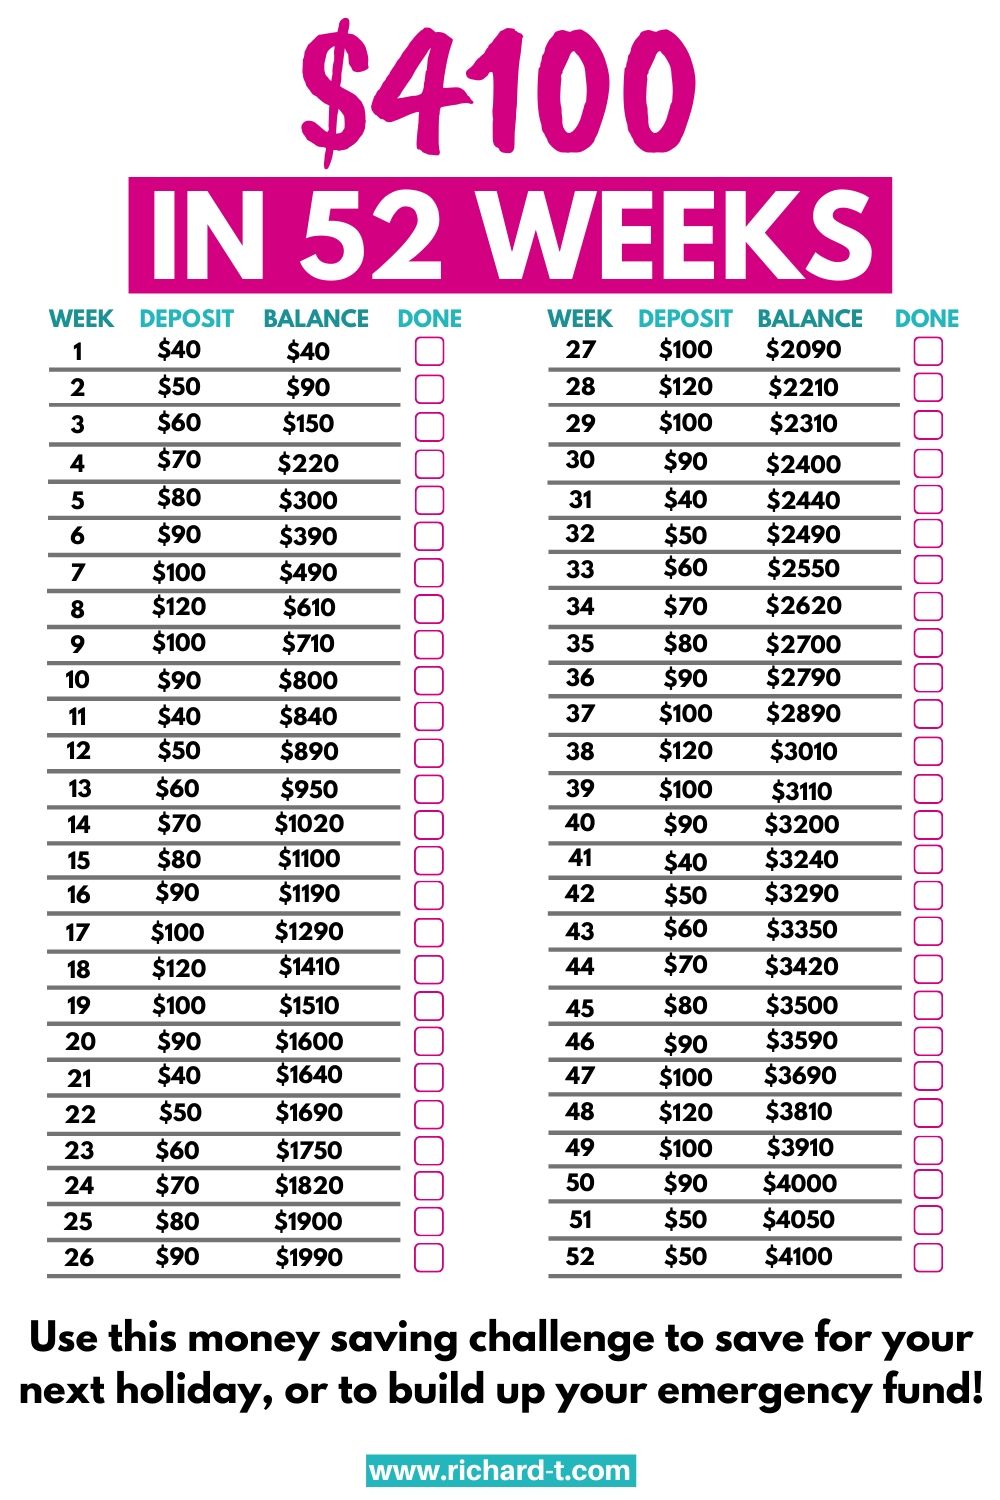 how-to-save-4100-easily-52-week-money-saving-challenge